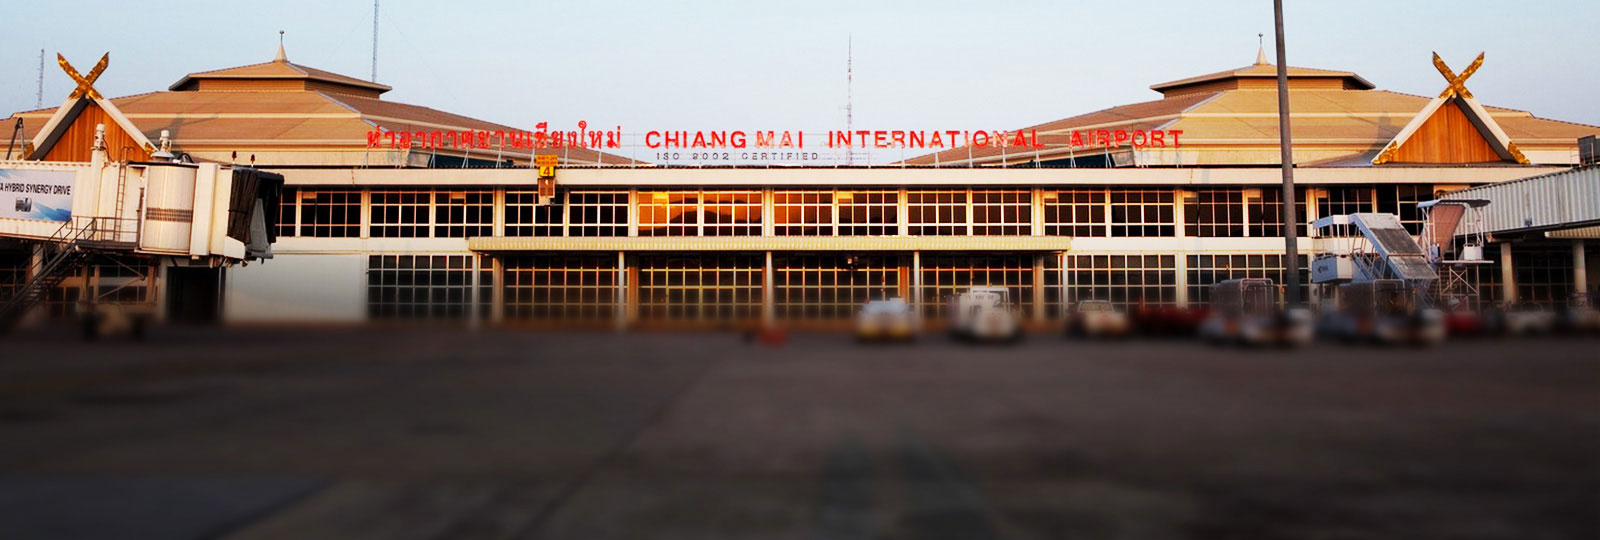 Chiang-Mai-International-Airport